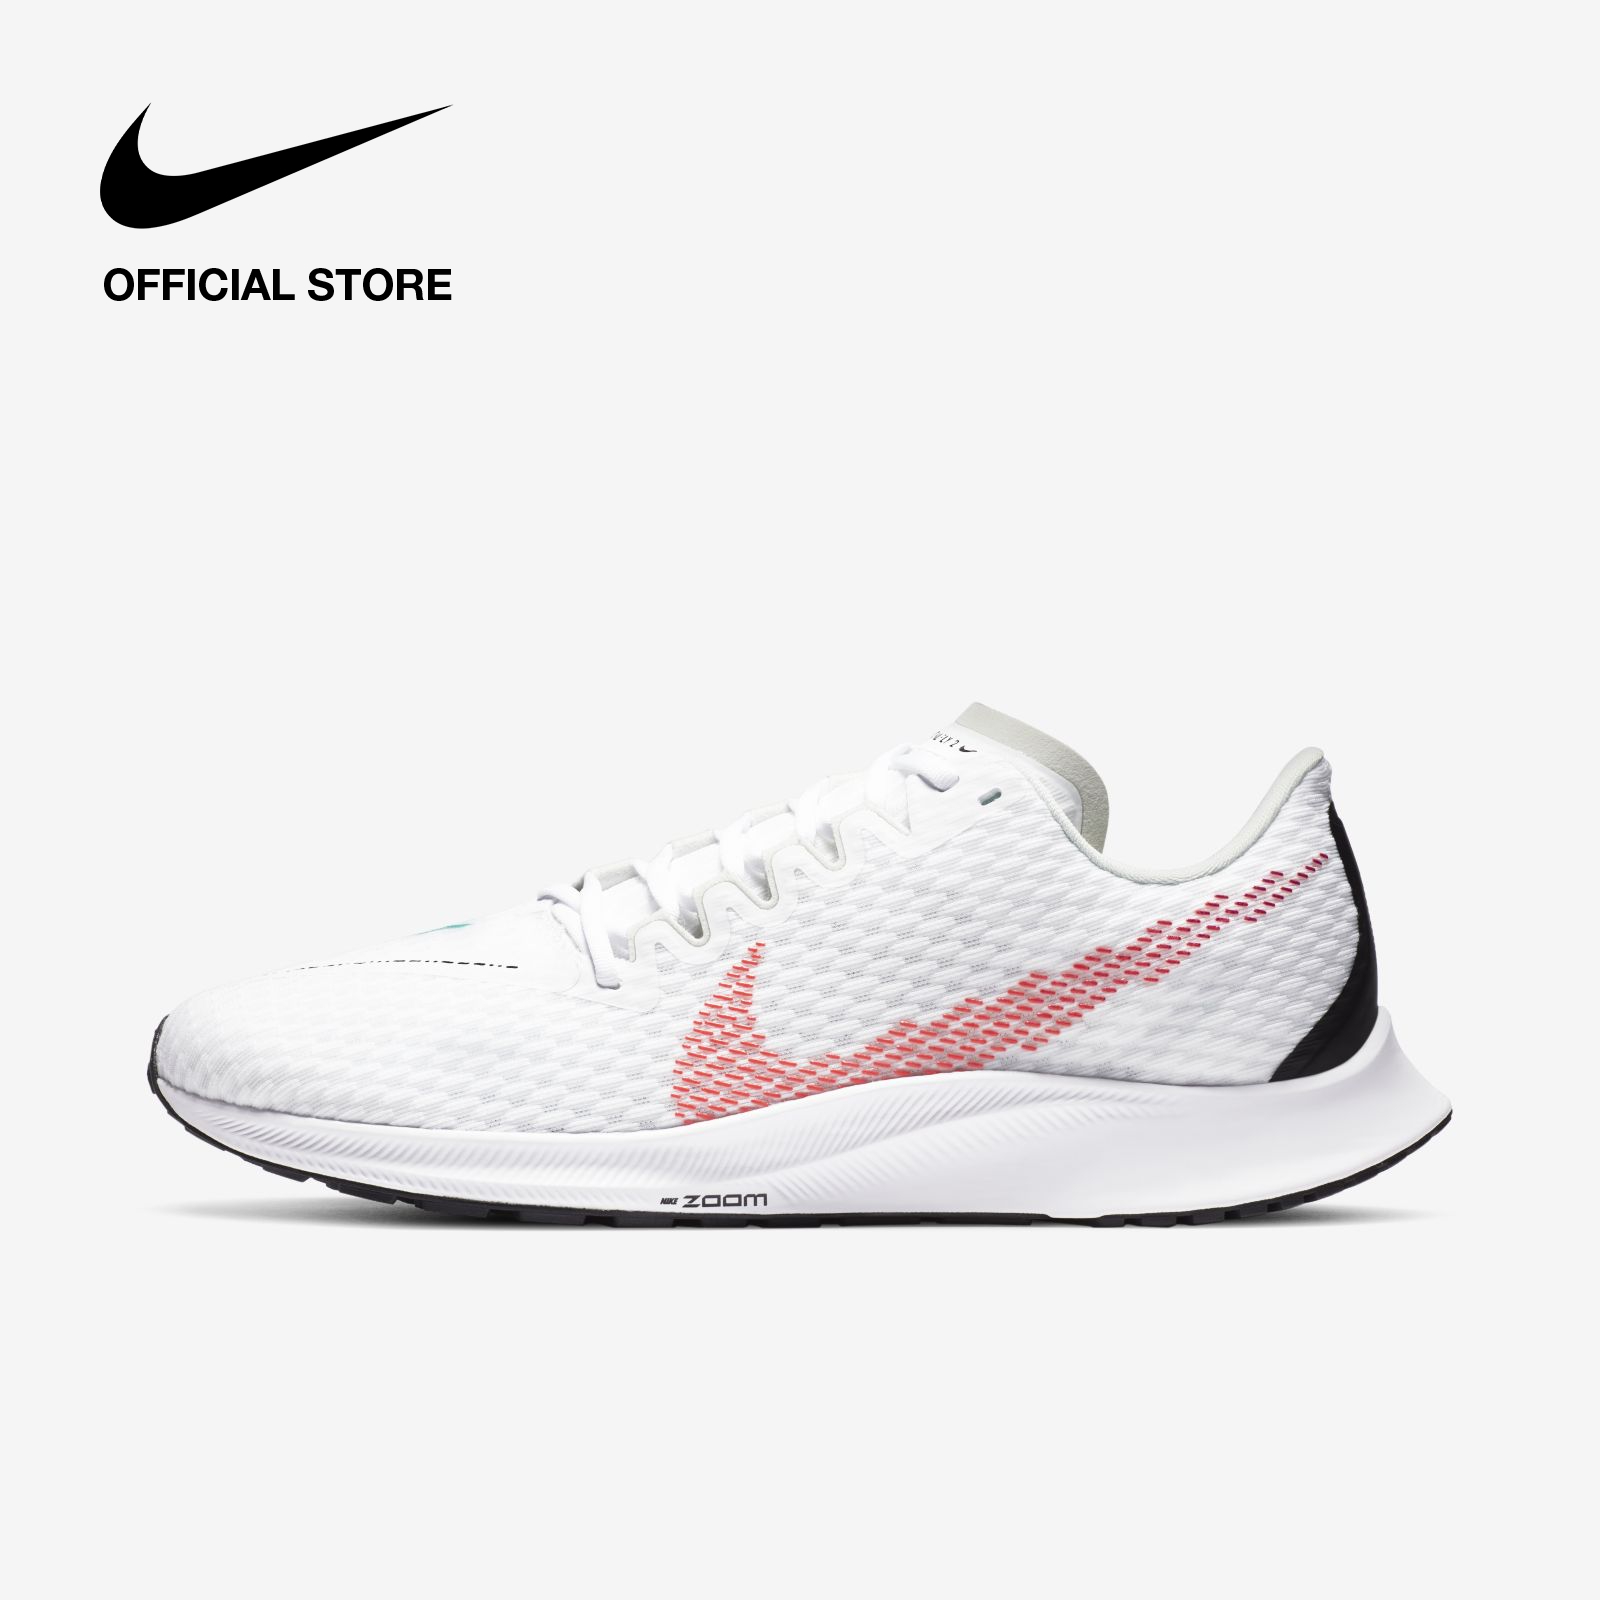 Nike Men's Zoom Rival Fly 2 Running Shoes - White ไนกี้ รองเท้าวิ่งผู้ชาย ซูม ไรเวิล ฟลาย 2 - สีขาว